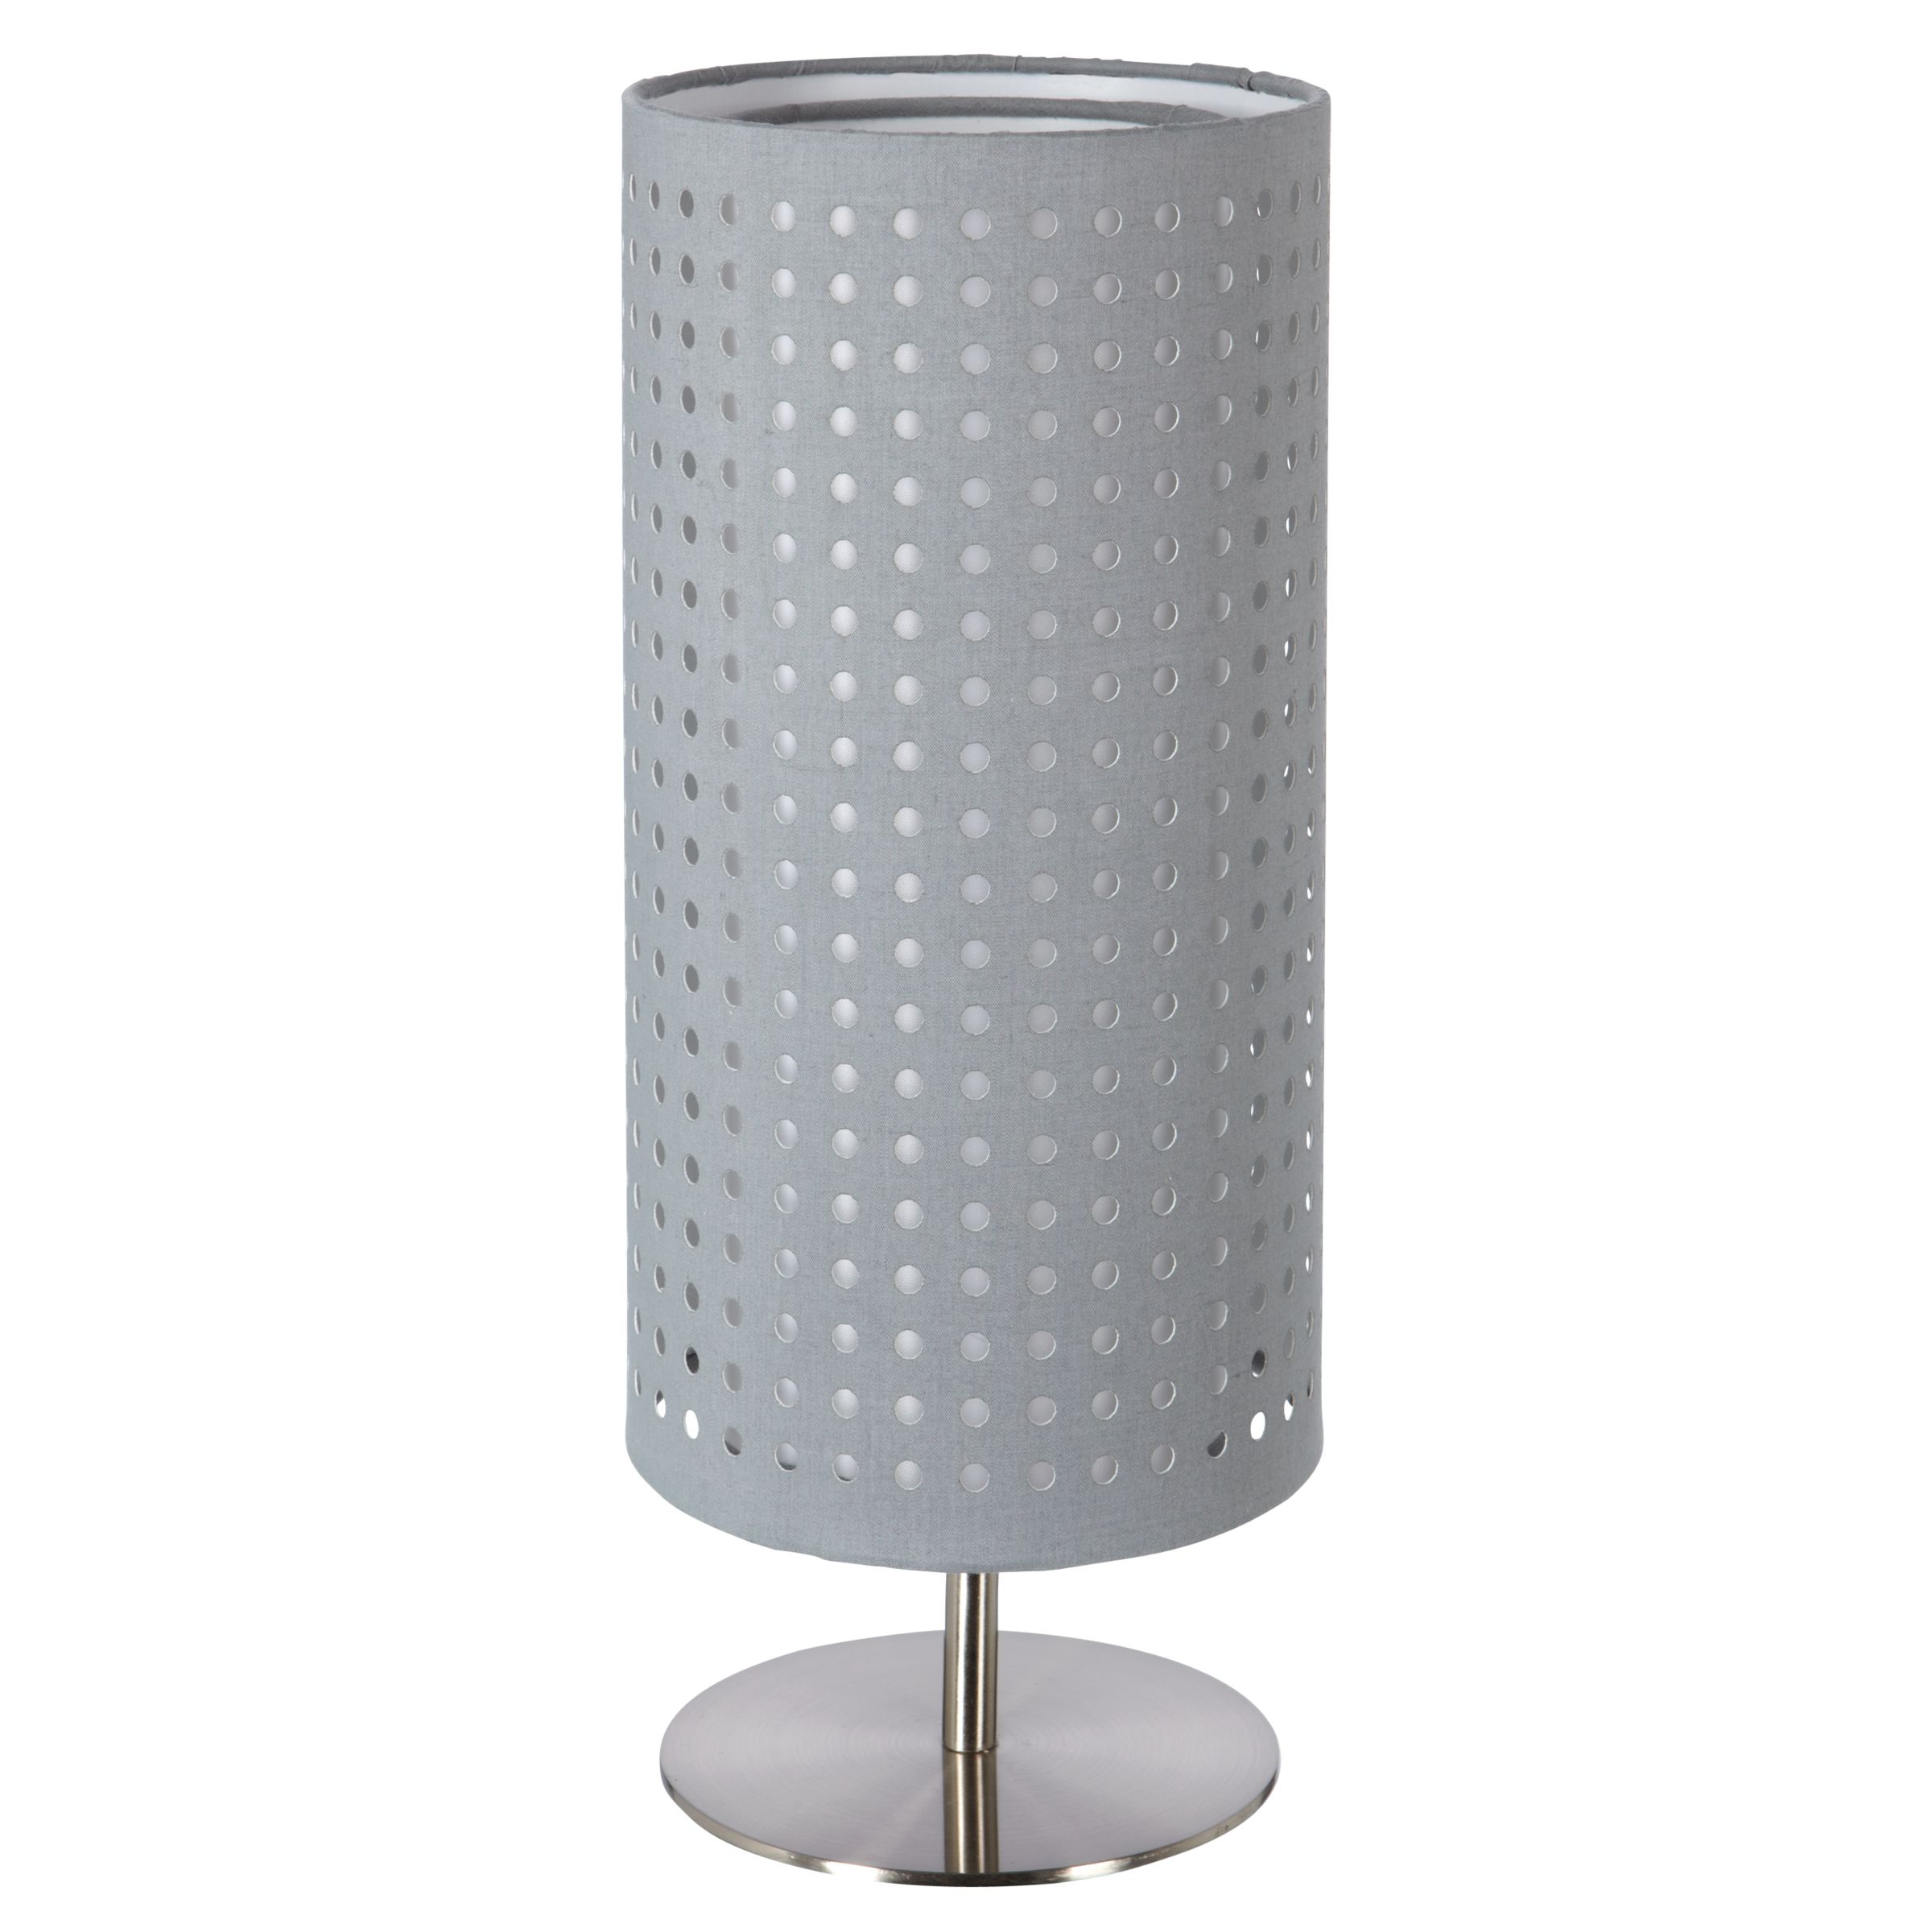 John Lewis Monica Table Lamp, Grey